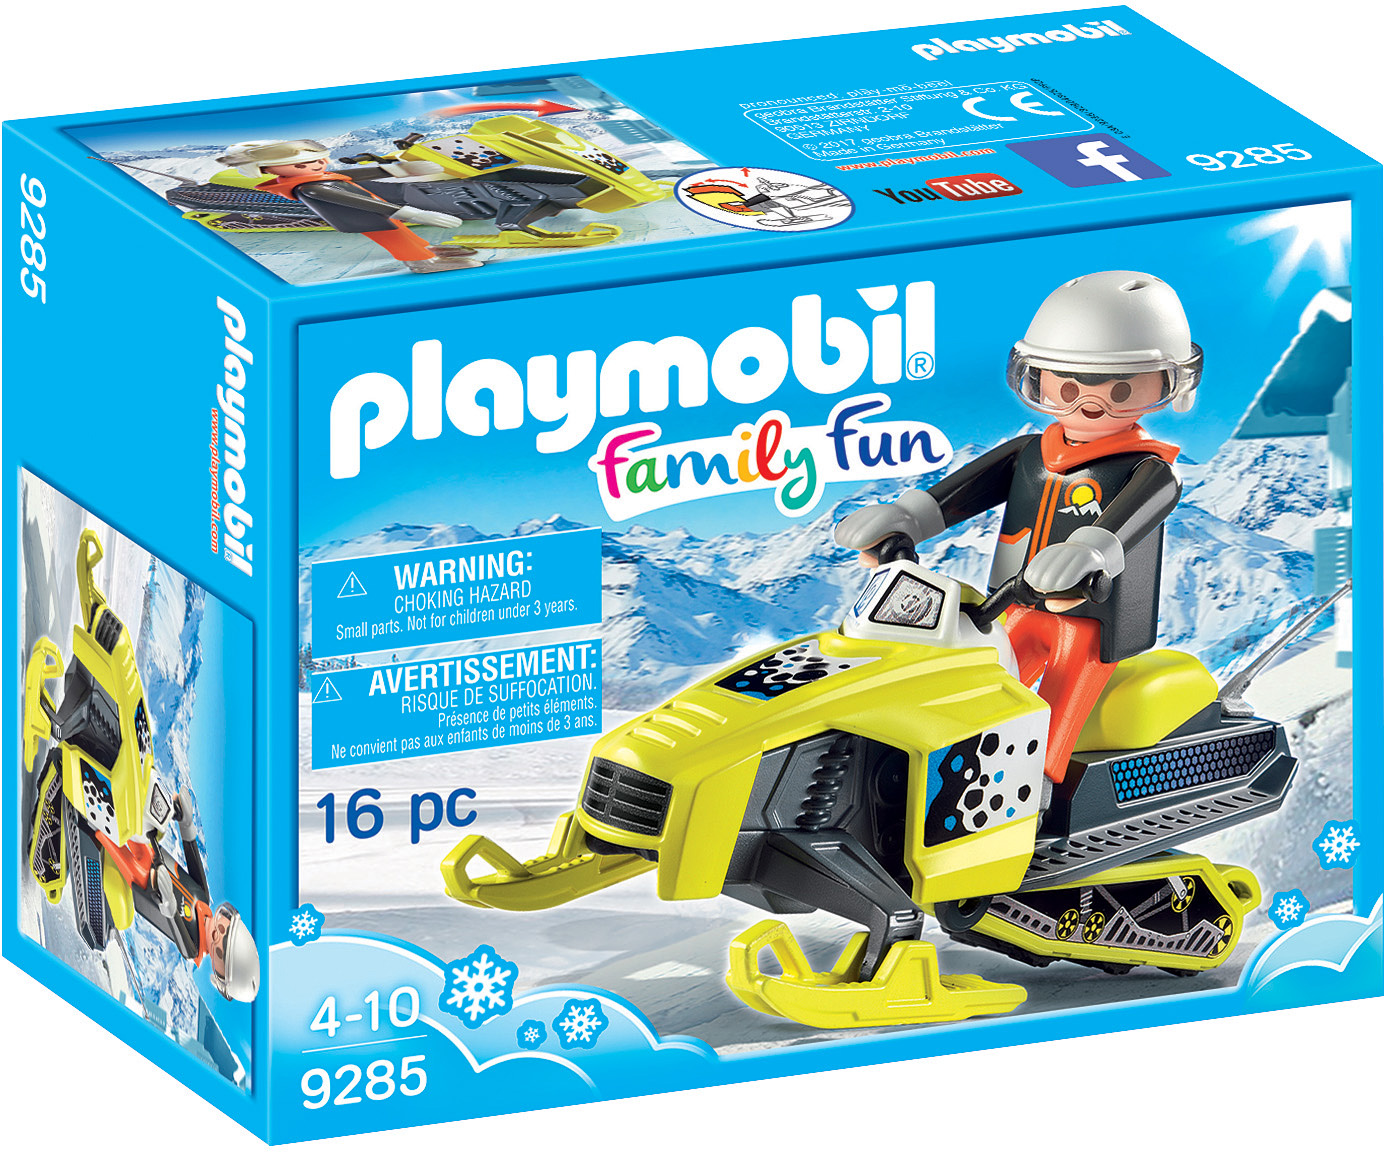 Motocross Driver - Playmobil - Dancing Bear Toys